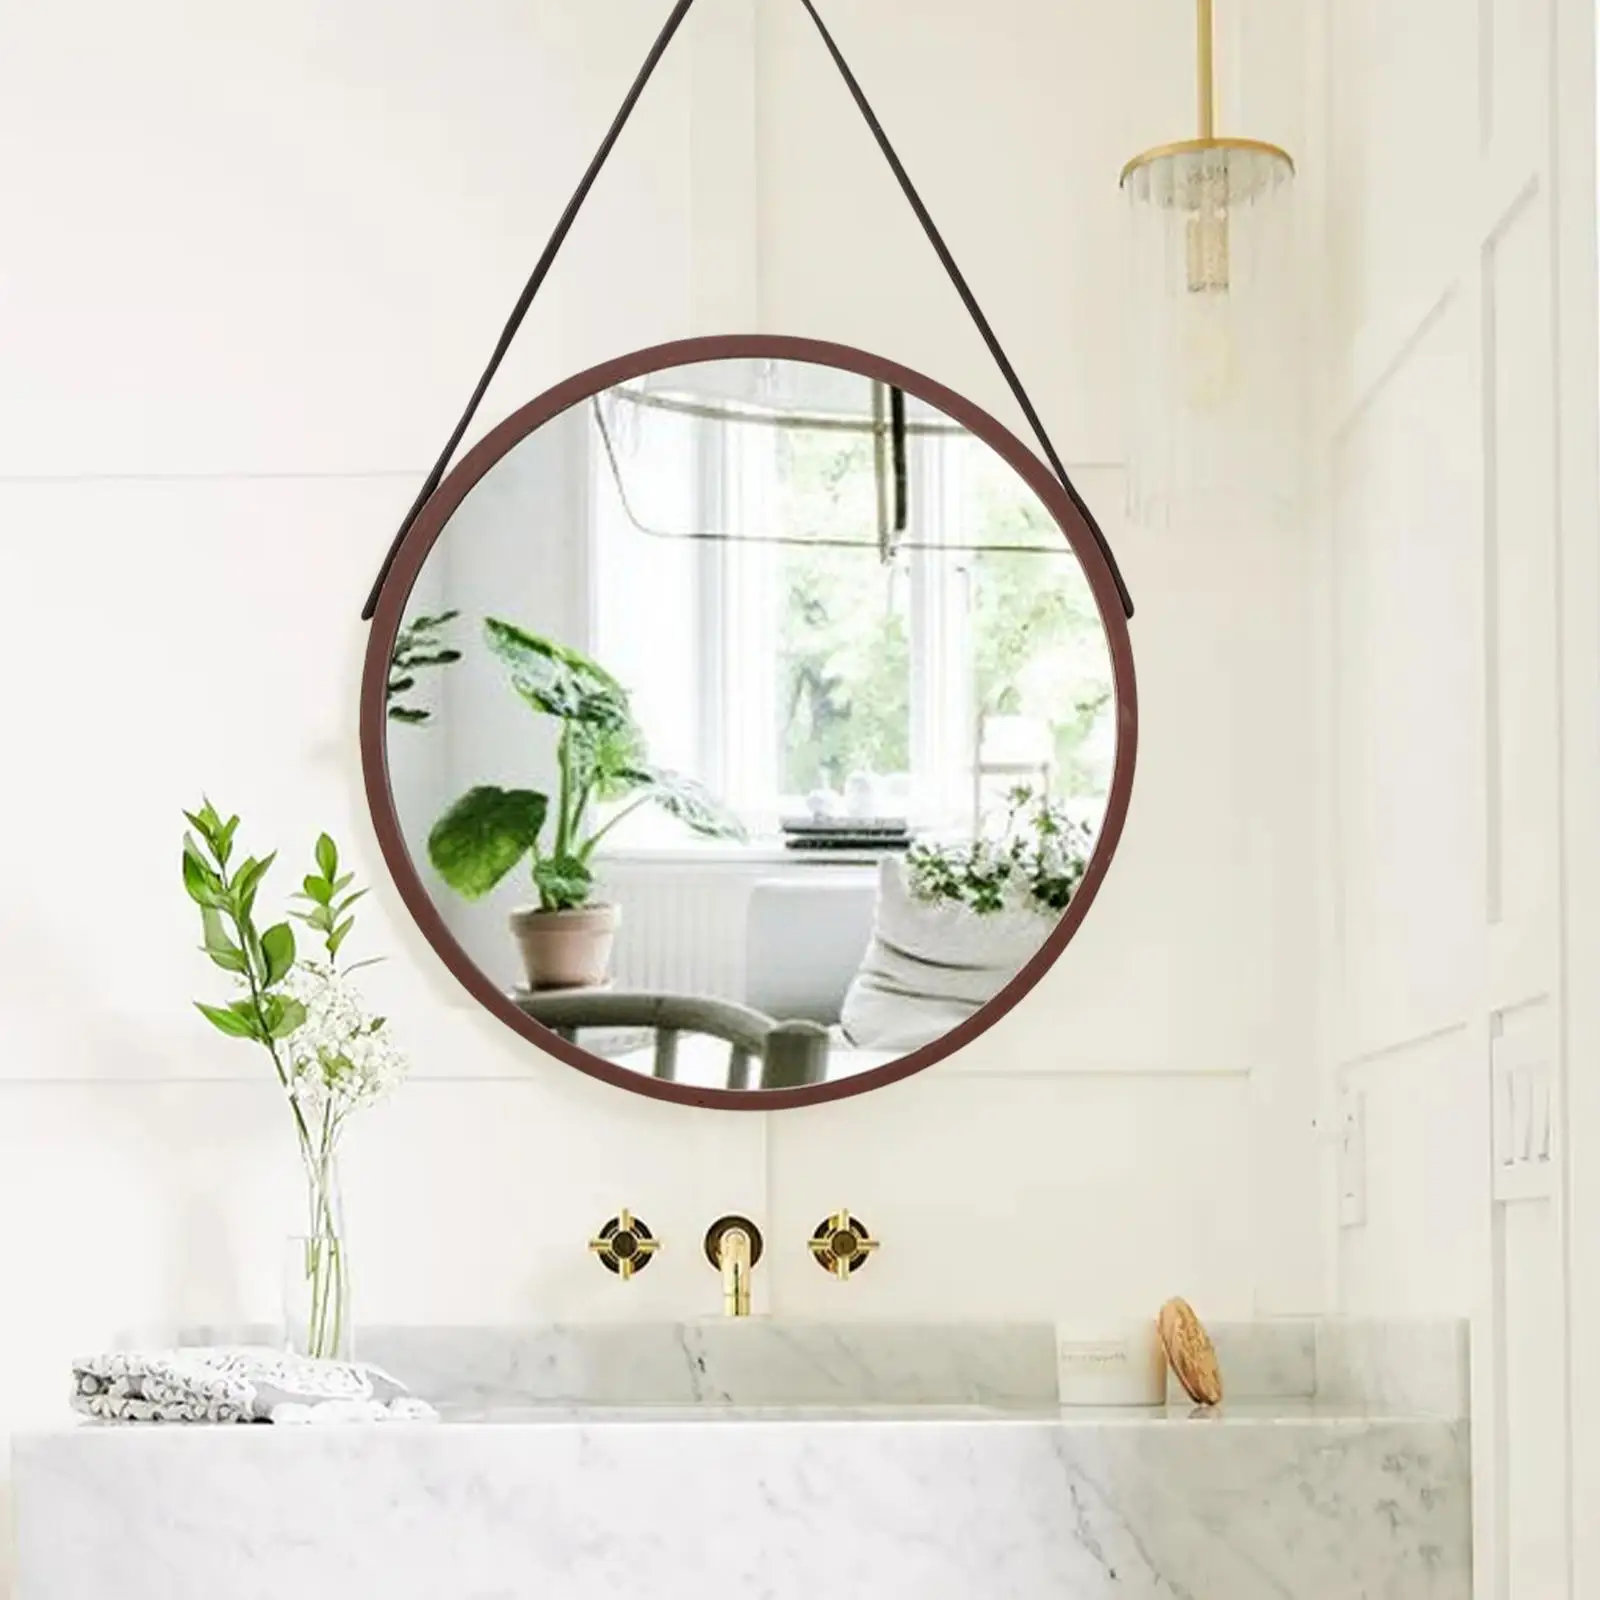 Hanging Wall Mounted Circle Mirror for Bedroom Bathroom Salon